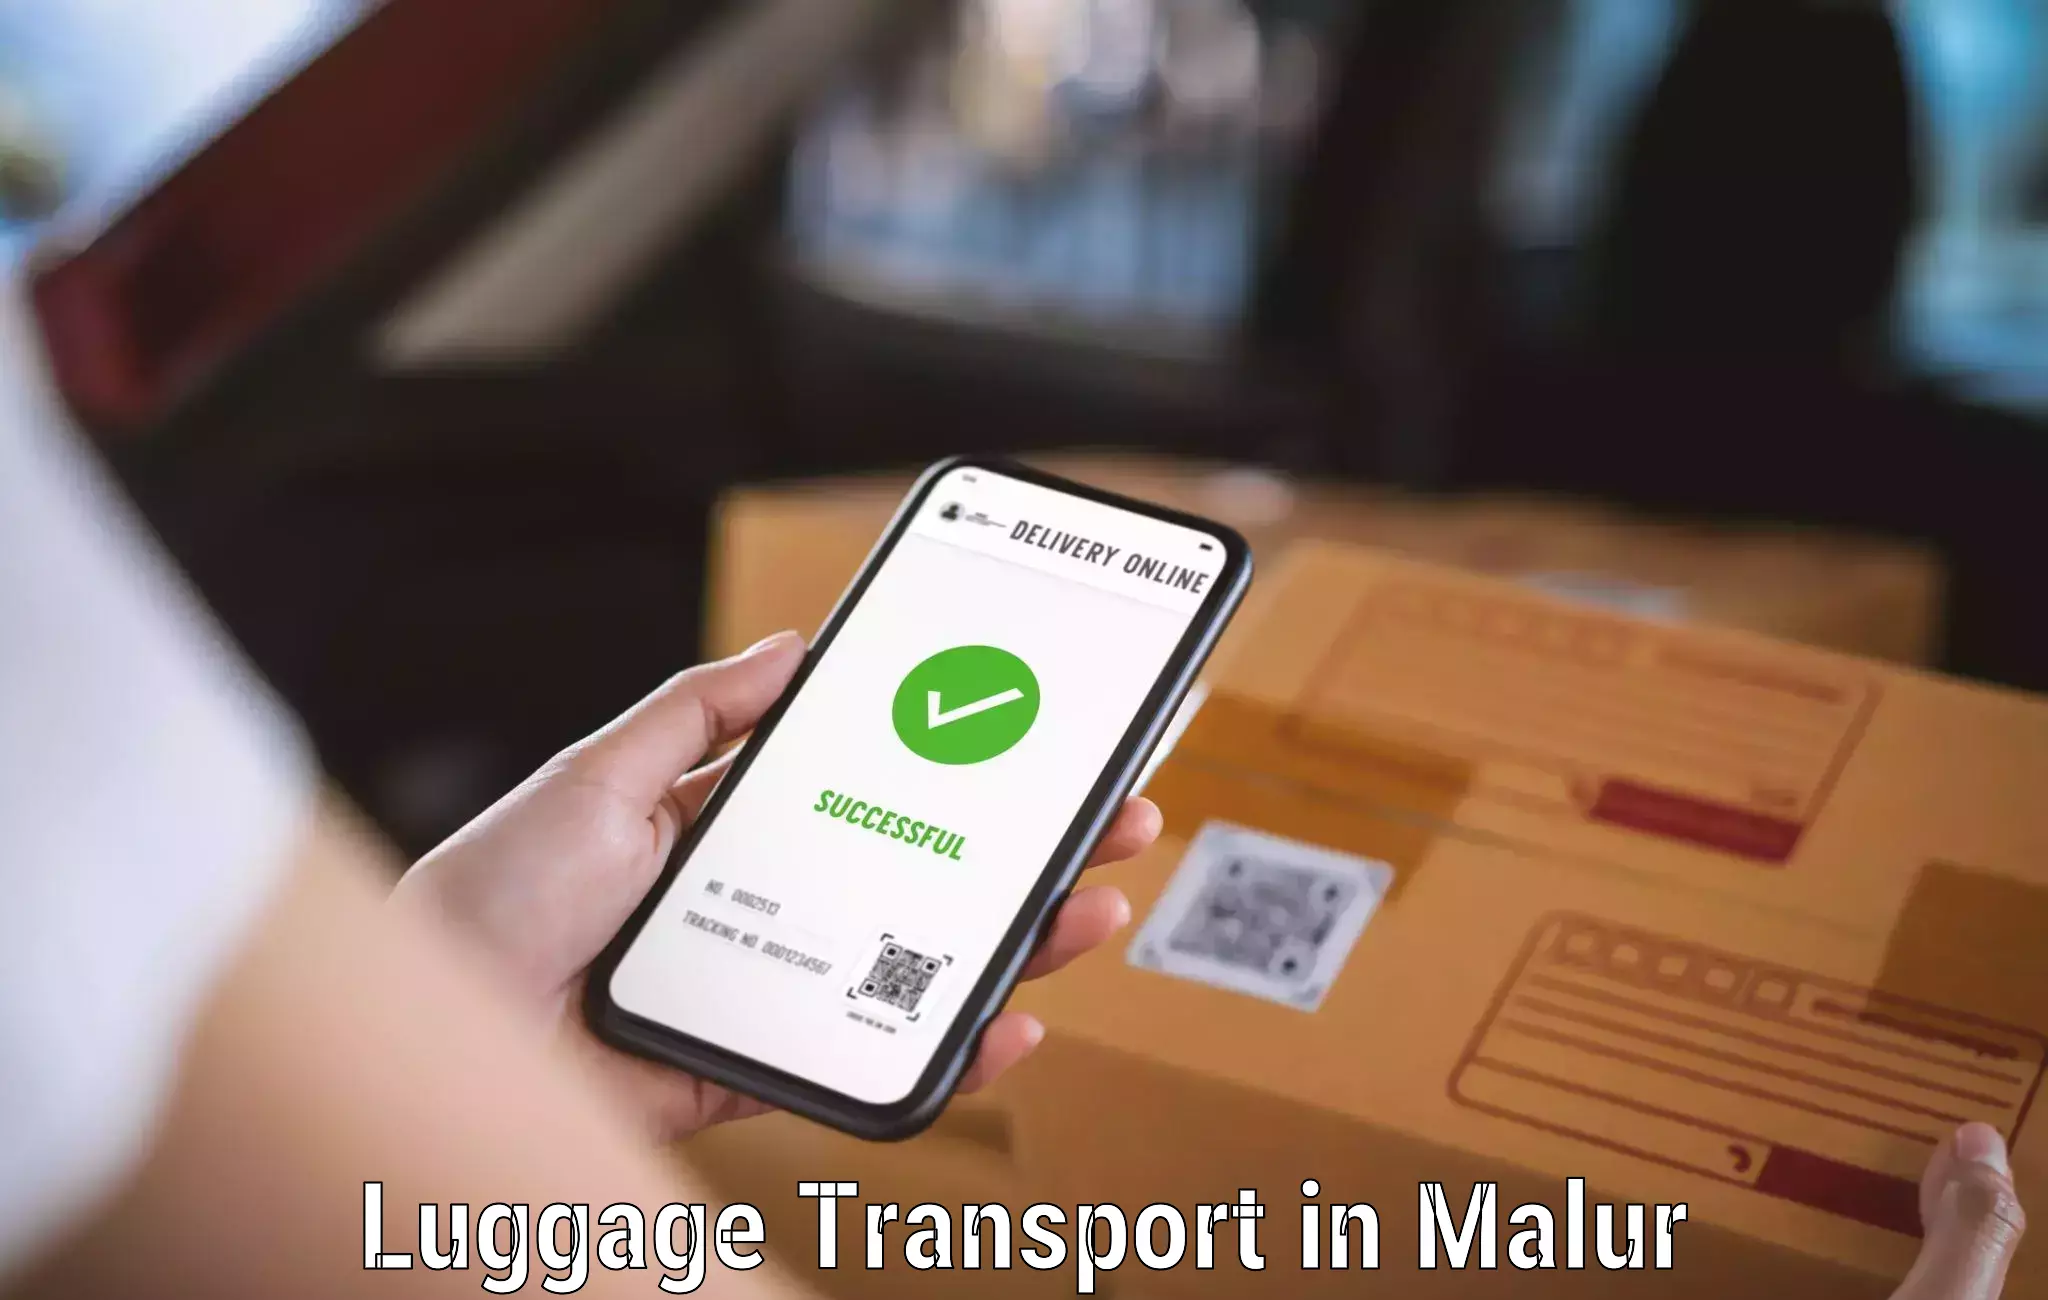 Corporate baggage transport in Malur